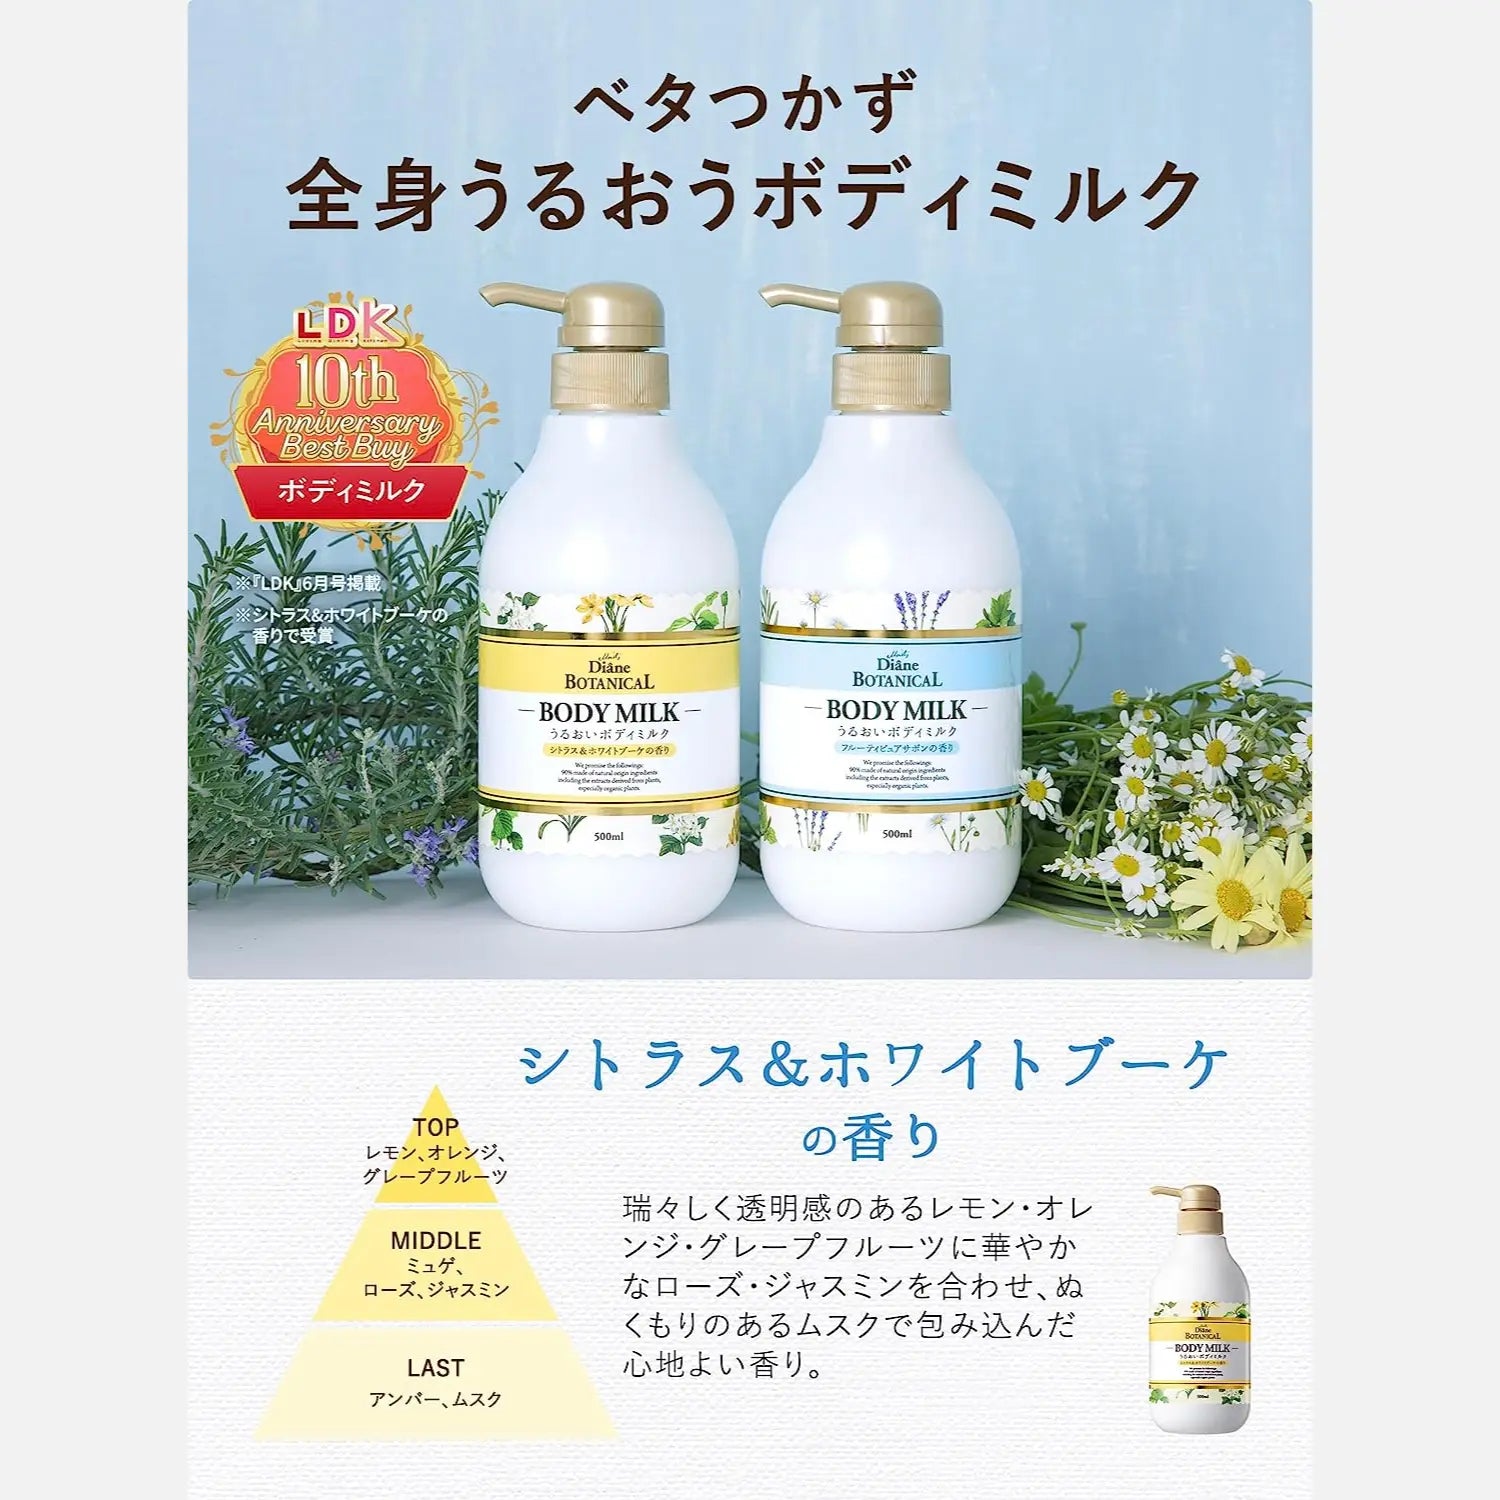 Diane Botanical Deep Moist Body Milk Citrus & White Bouquet 500ml - Buy Me Japan